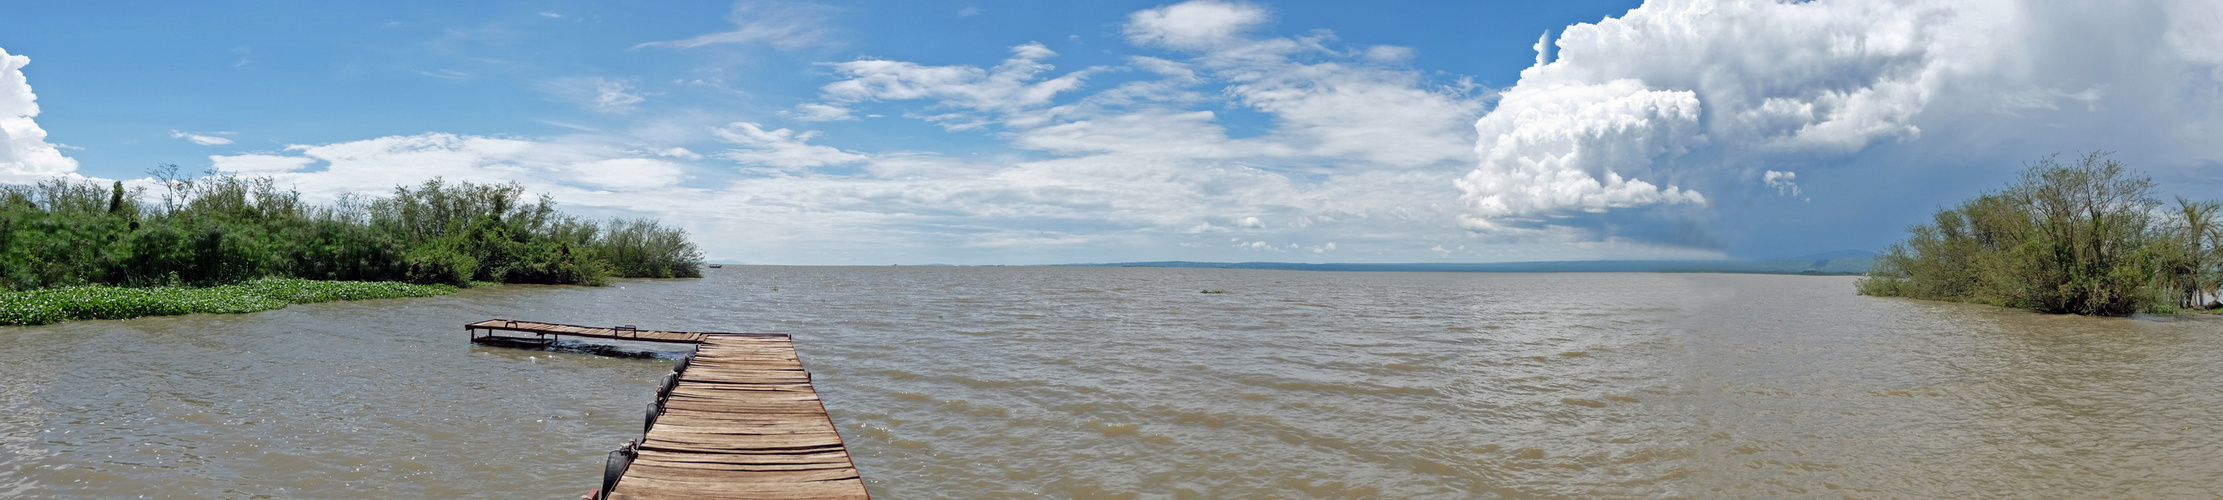 Lake Victoria - Kenya - 2